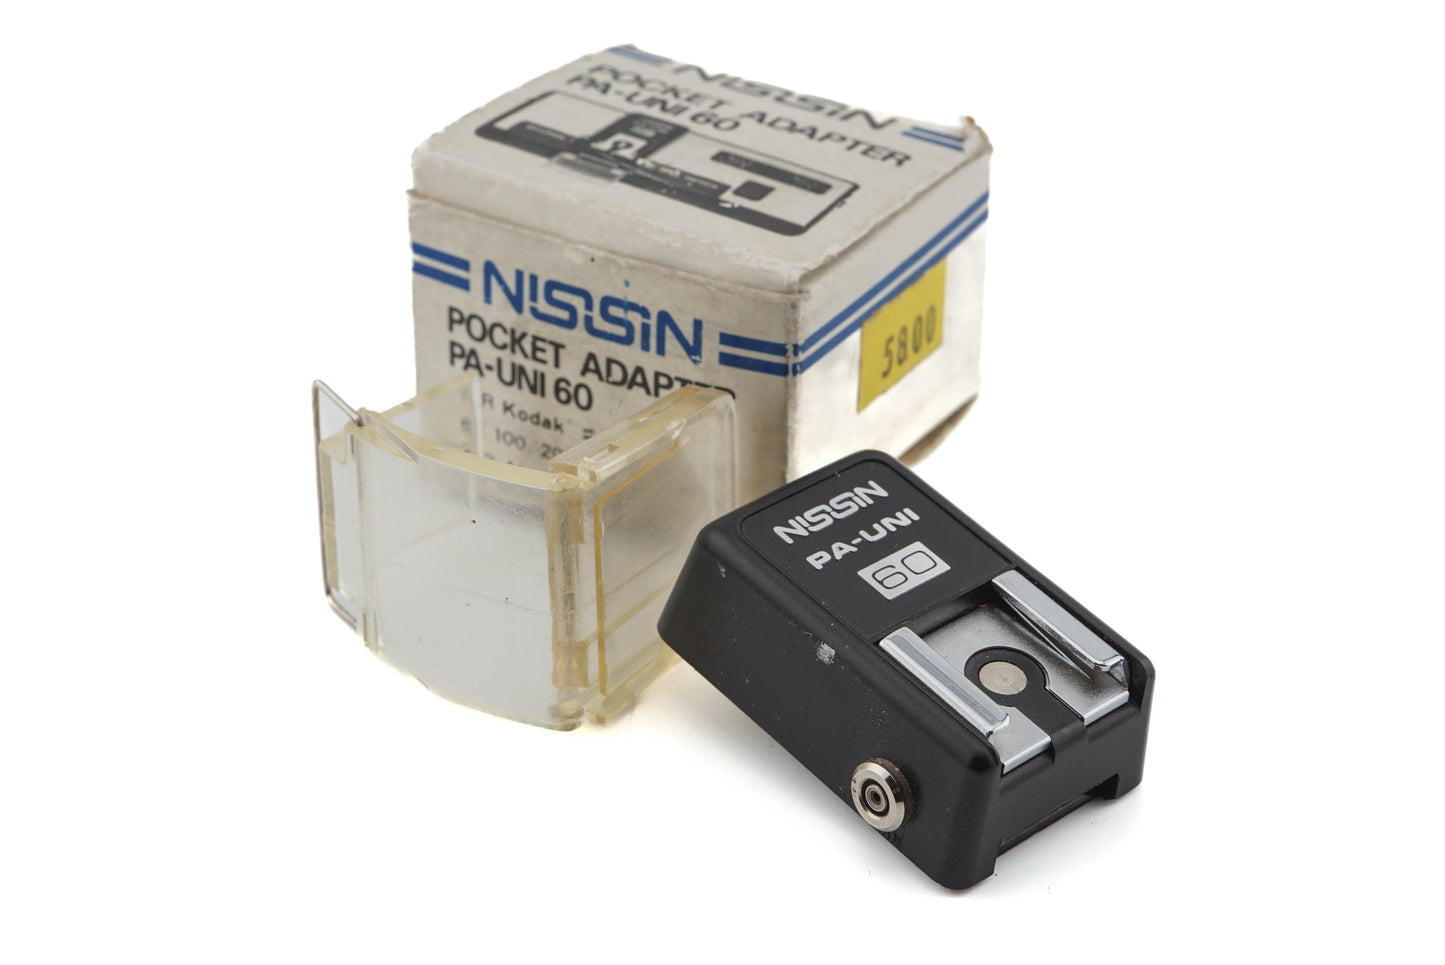 Nissin Pocket Adapter PA-UNI 60